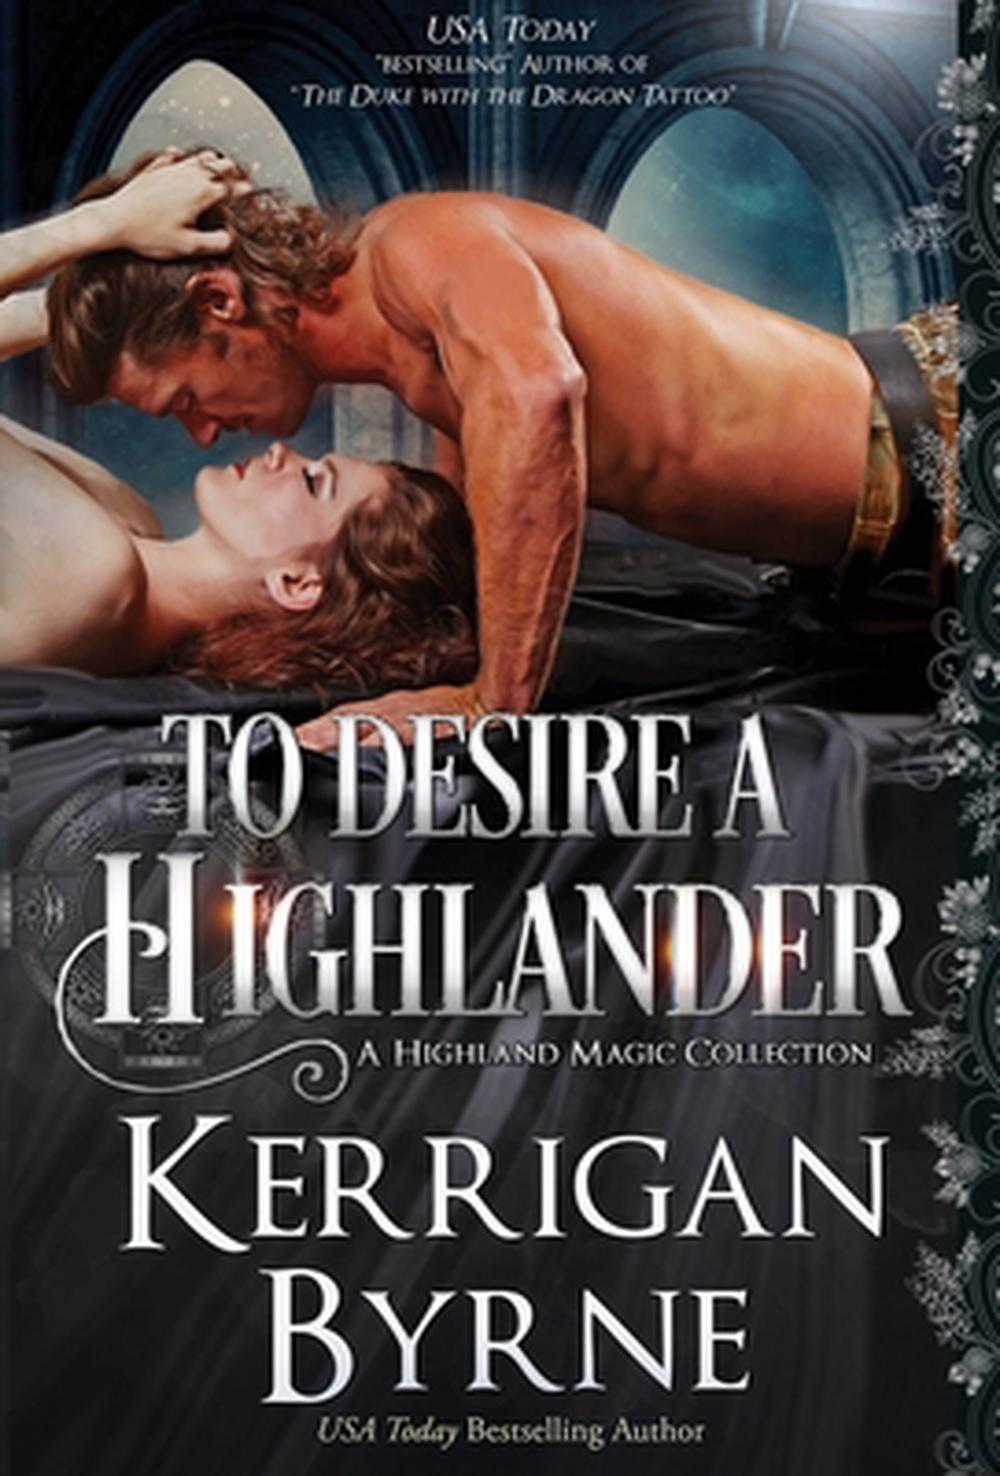 the highlander by kerrigan byrne